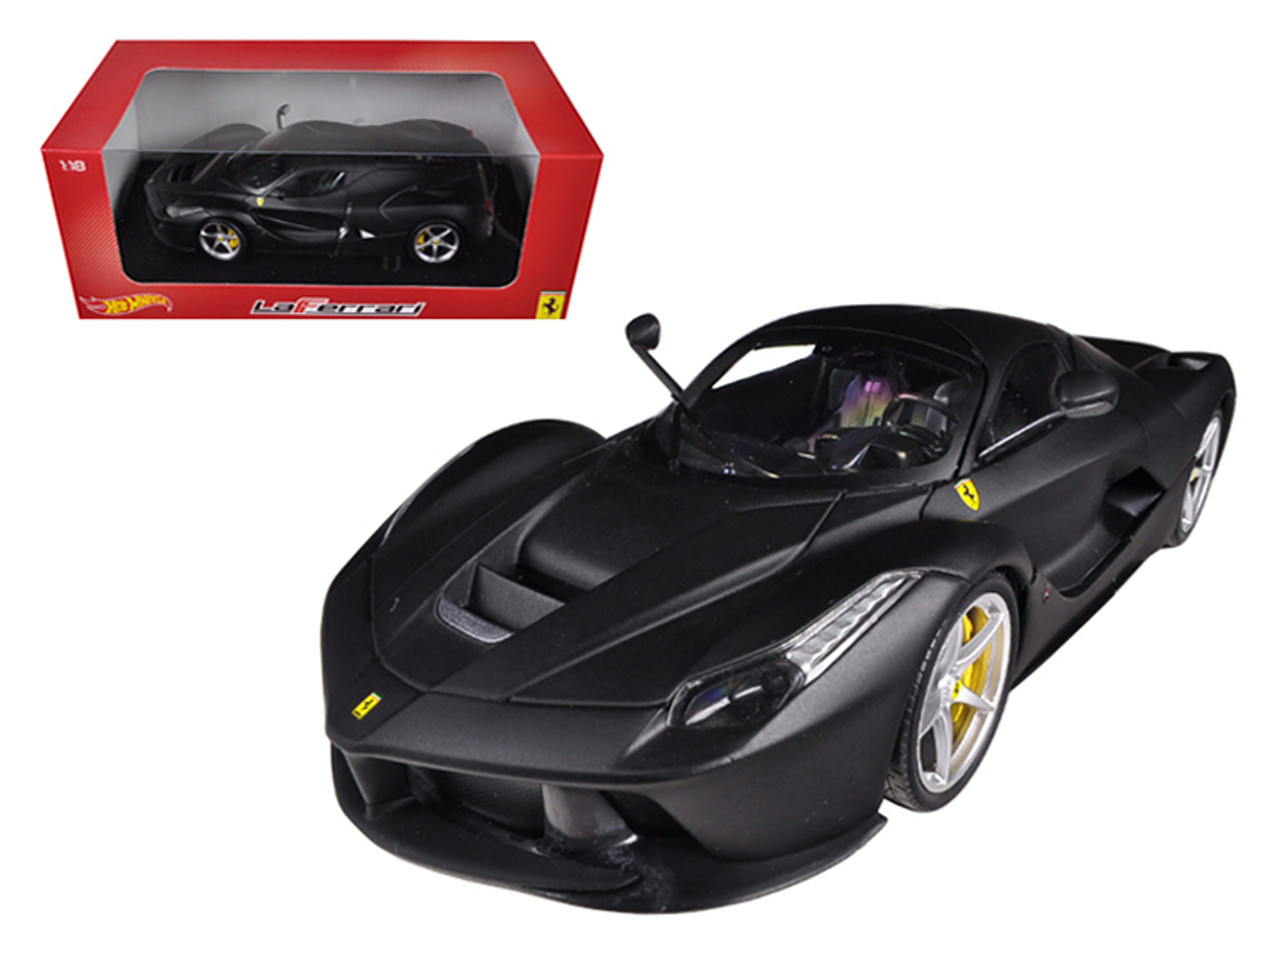 1/18 Hot Wheels Ferrari Laferrari F70 Hybrid Matt Black Diecast Car Model